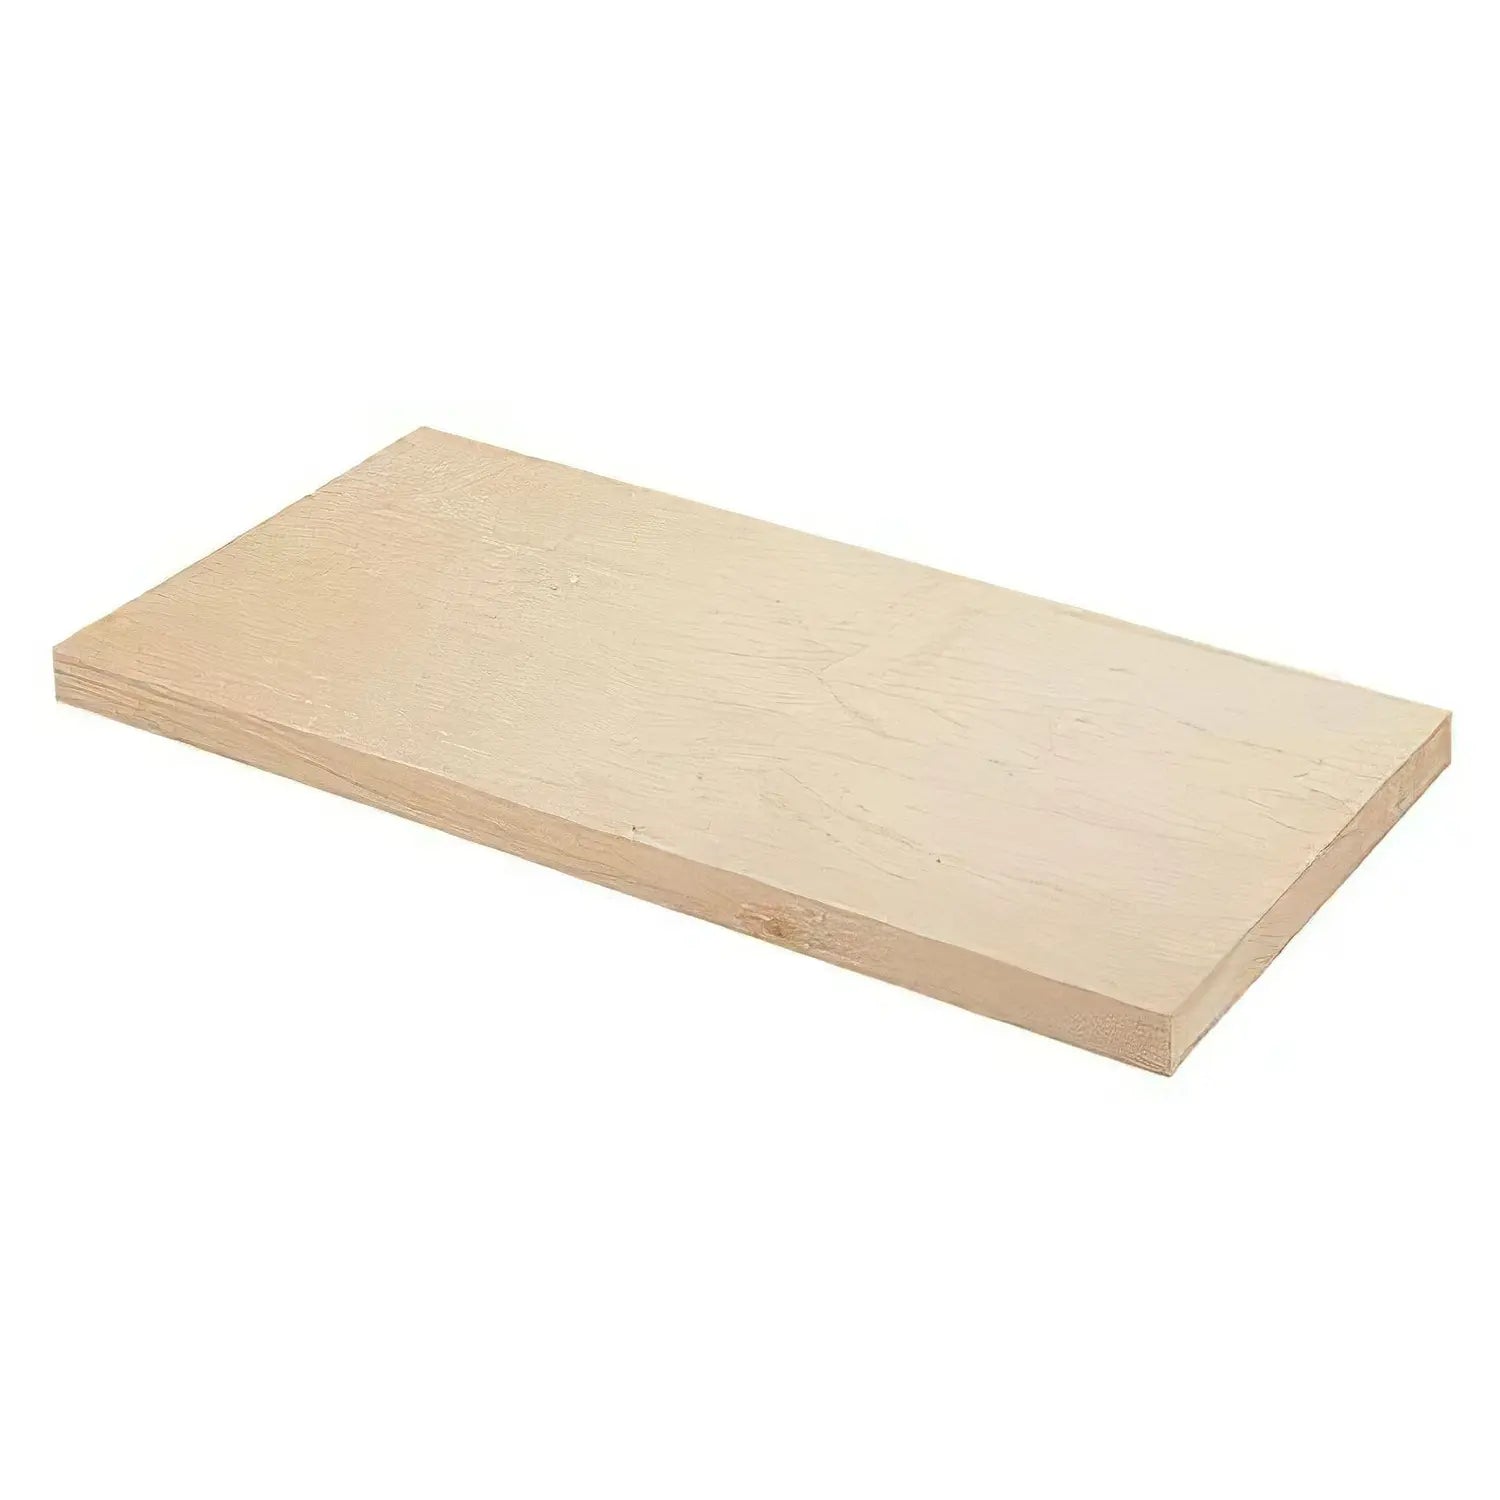 MIYABI URUSHI KOGEI Single Piece Canadian Cypress Wooden Cutting Board  522189 - Globalkitchen Japan